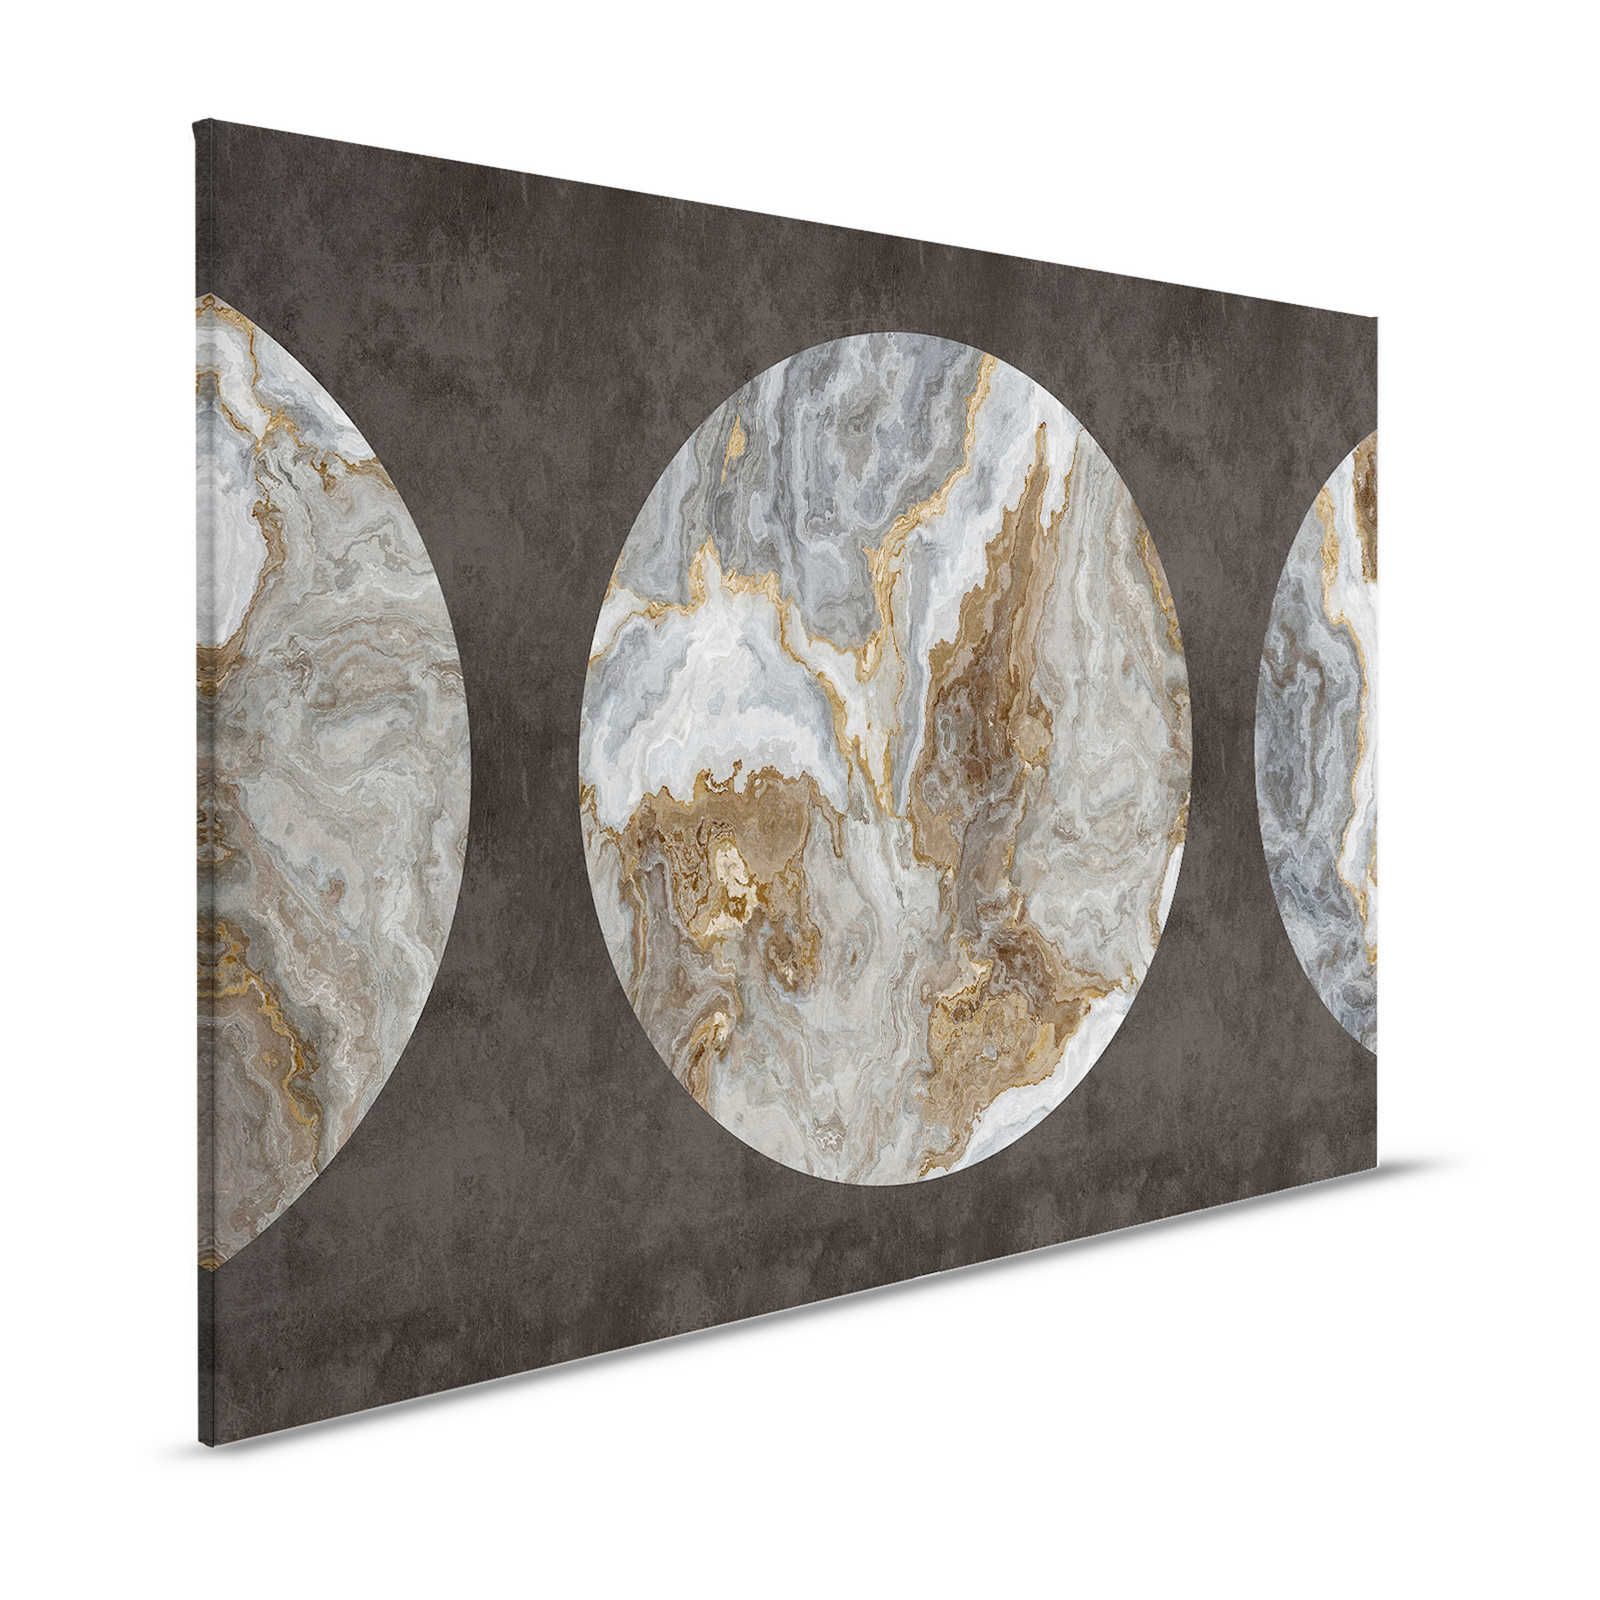 Luna 1 - Marble Canvas Schilderij Cirkel Design & Zwarte Gips Look - 1.20 m x 0.80 m
